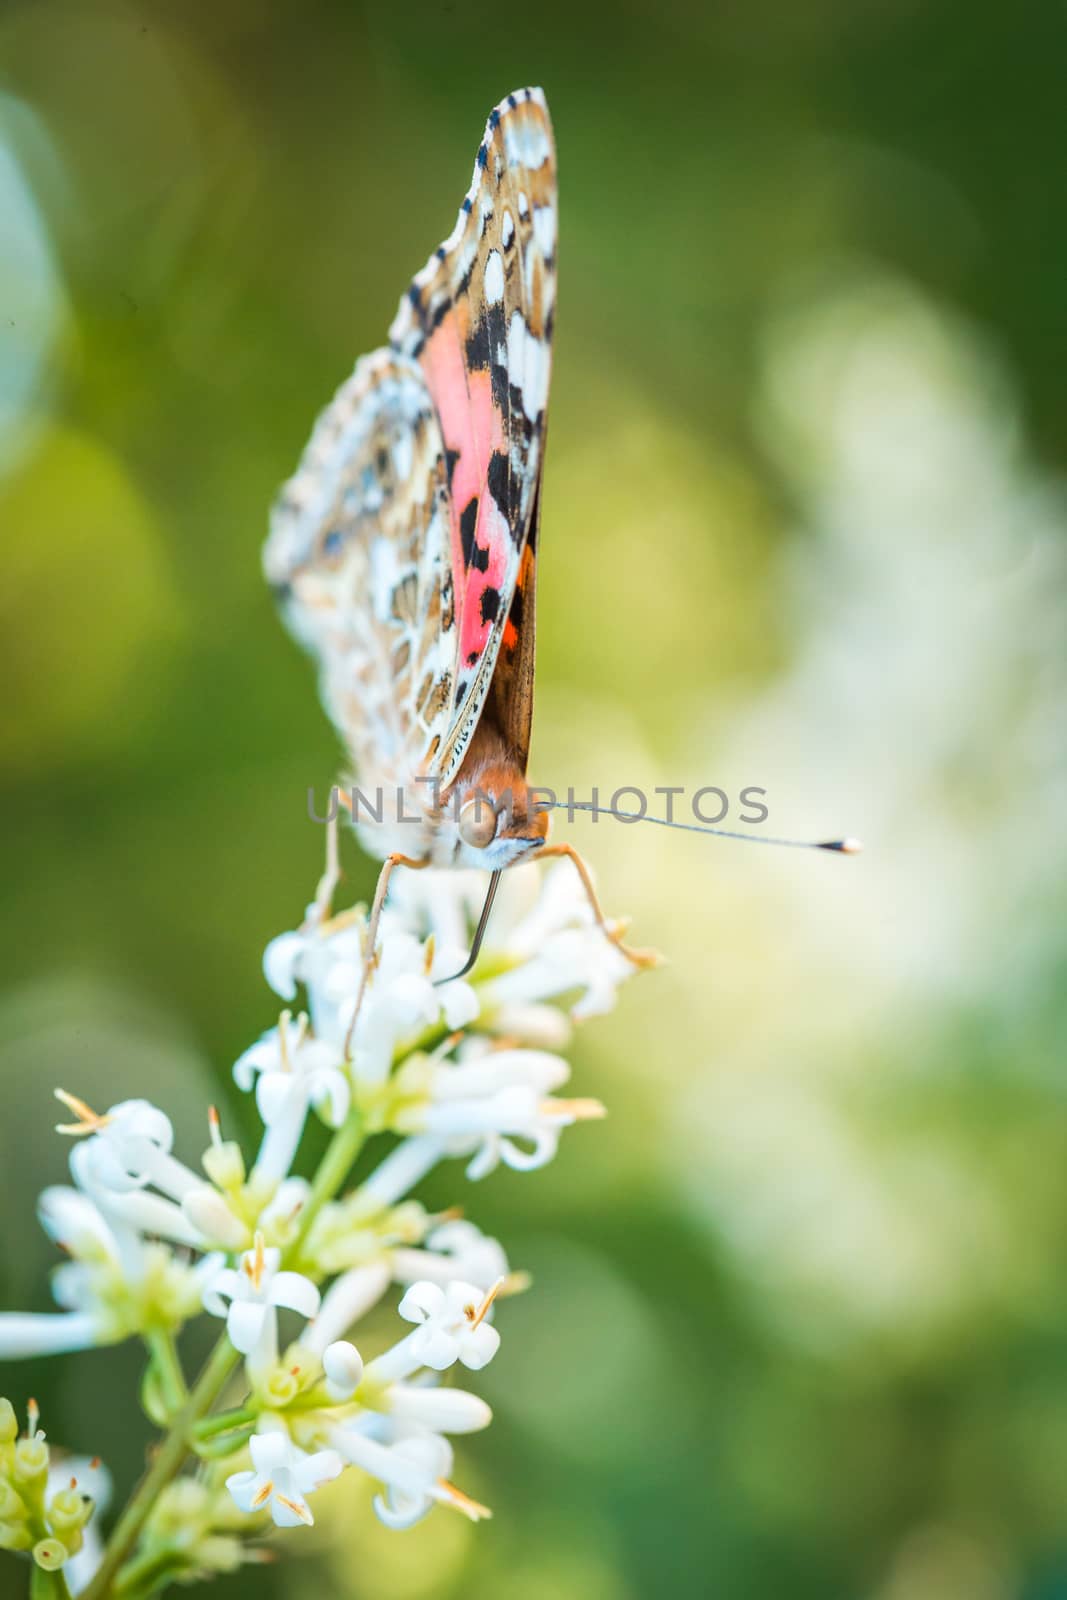 A lovely butterfly sits on a lavender flower in a summer garden by petrsvoboda91